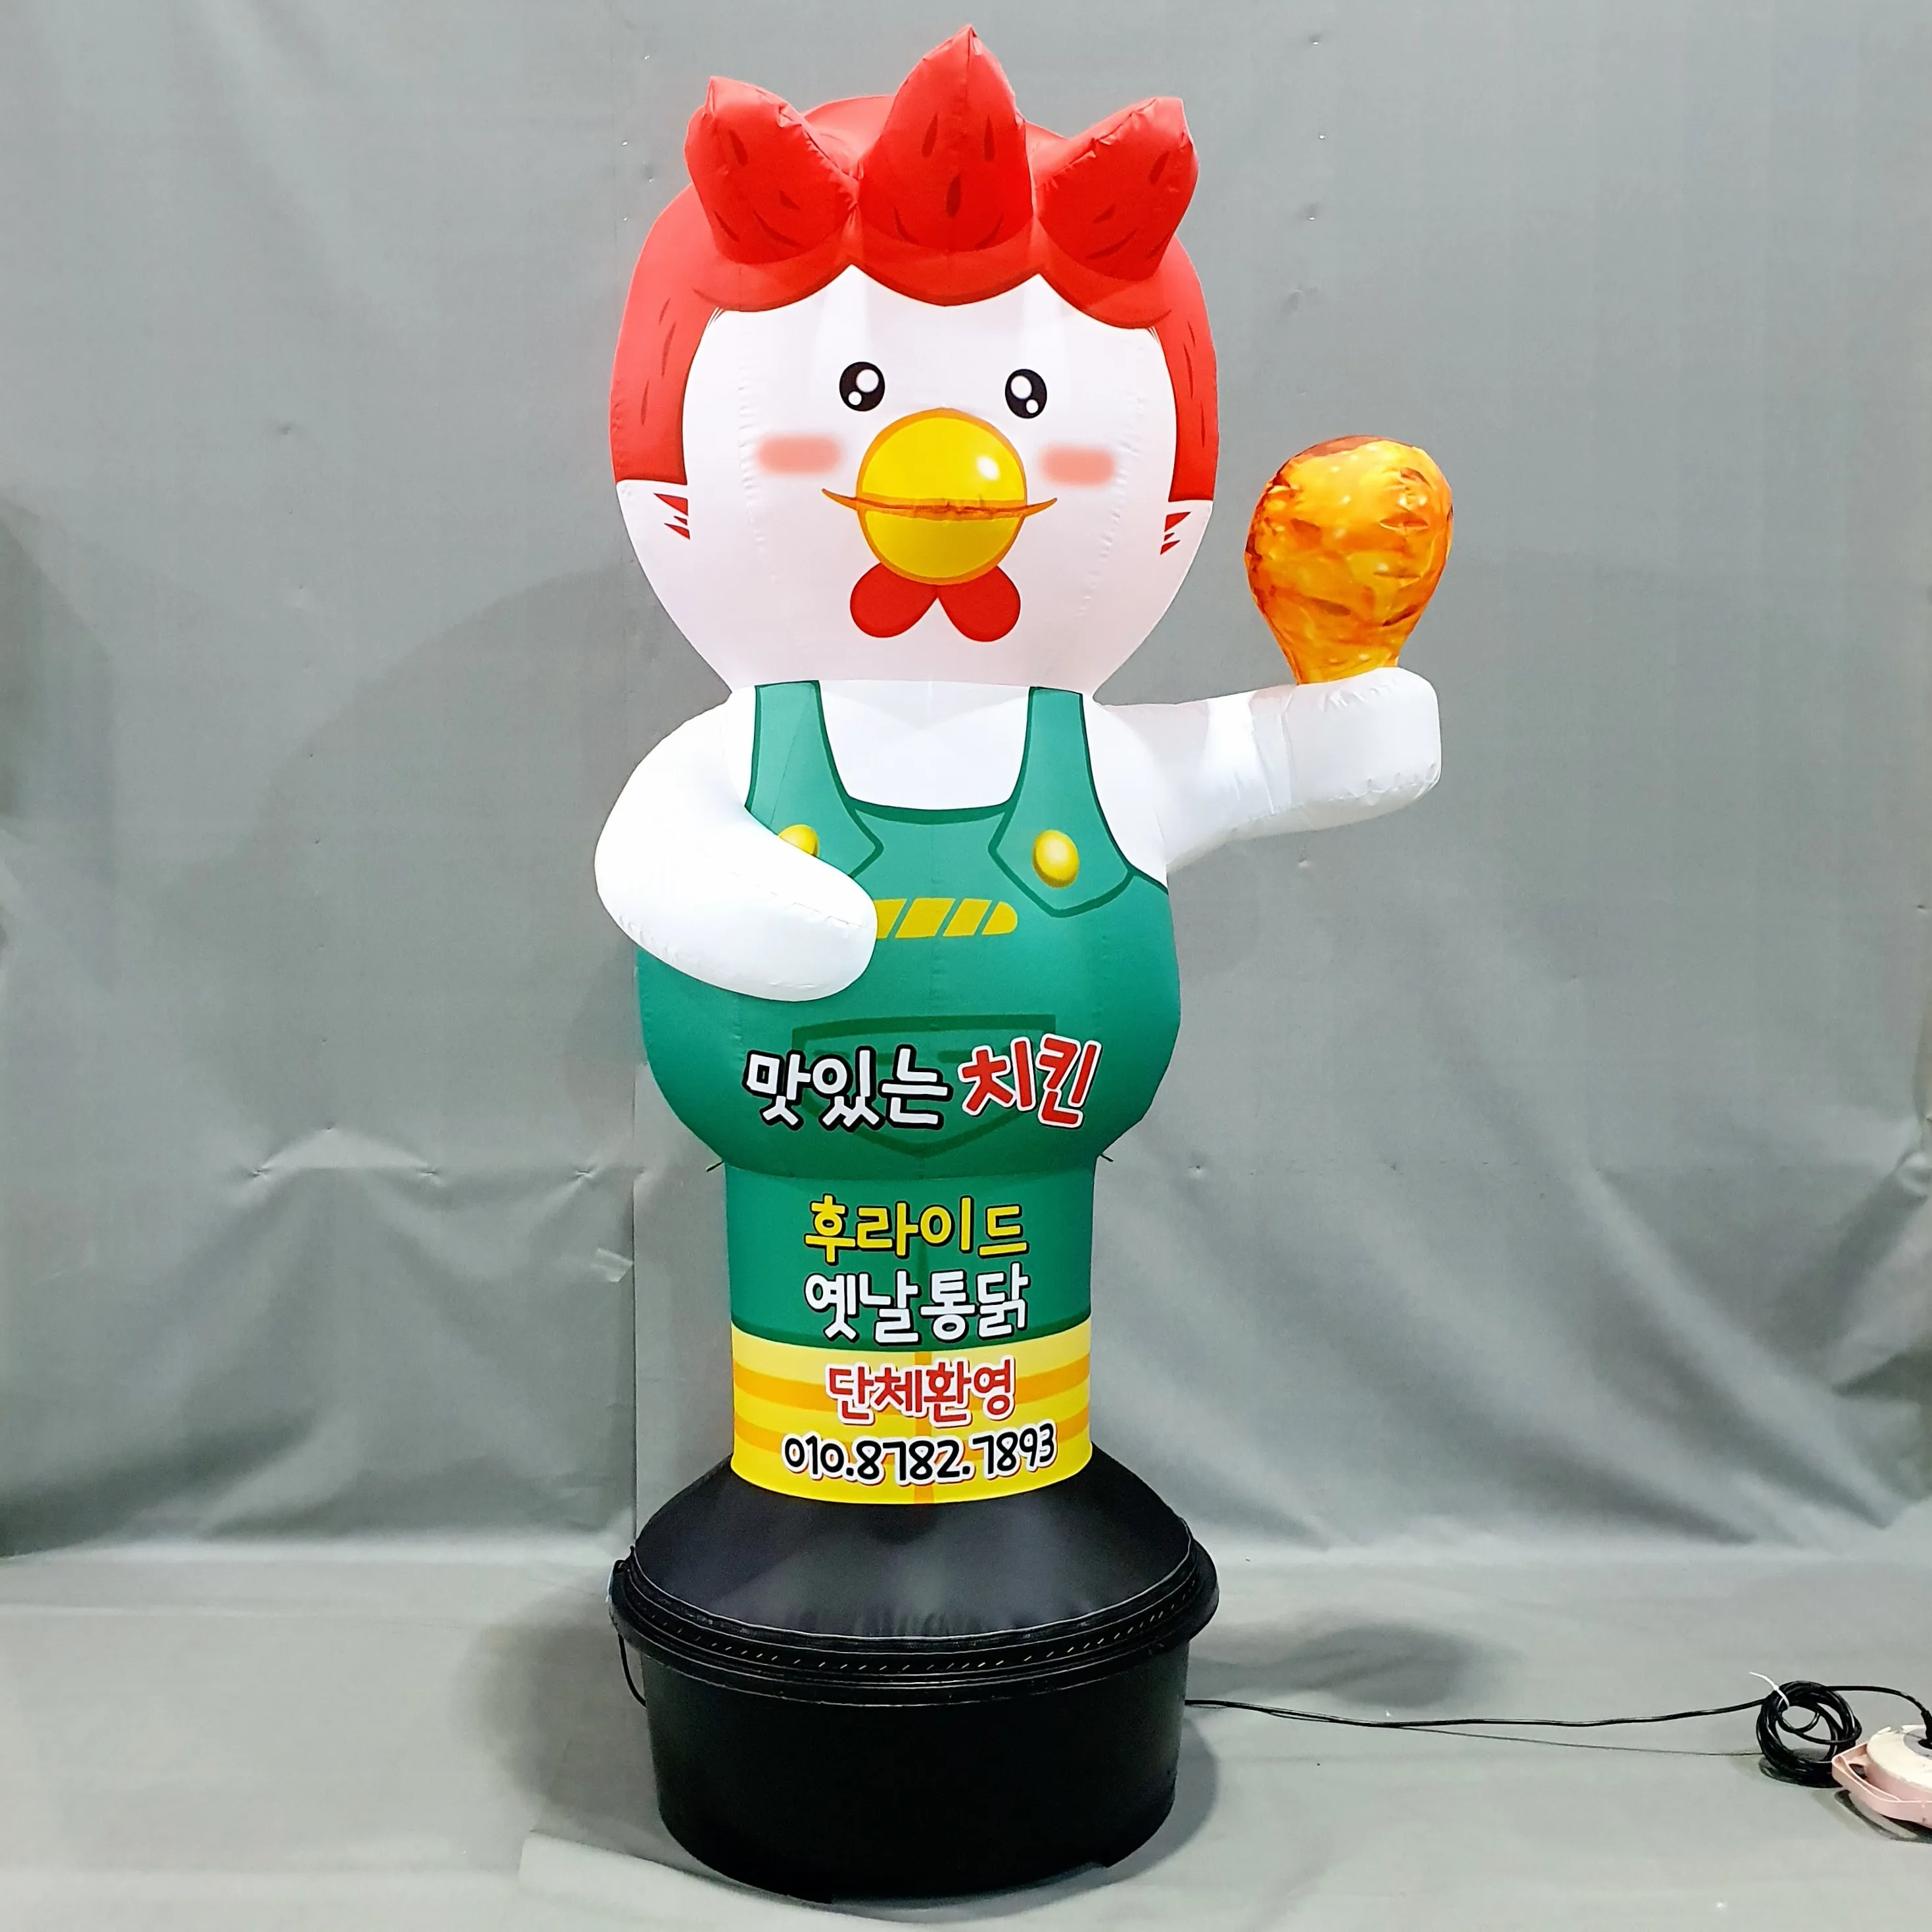 [3D надувной знак] рекламная акция курицы, предлагаемая г-ном теплая курица в зеленых подтяжках